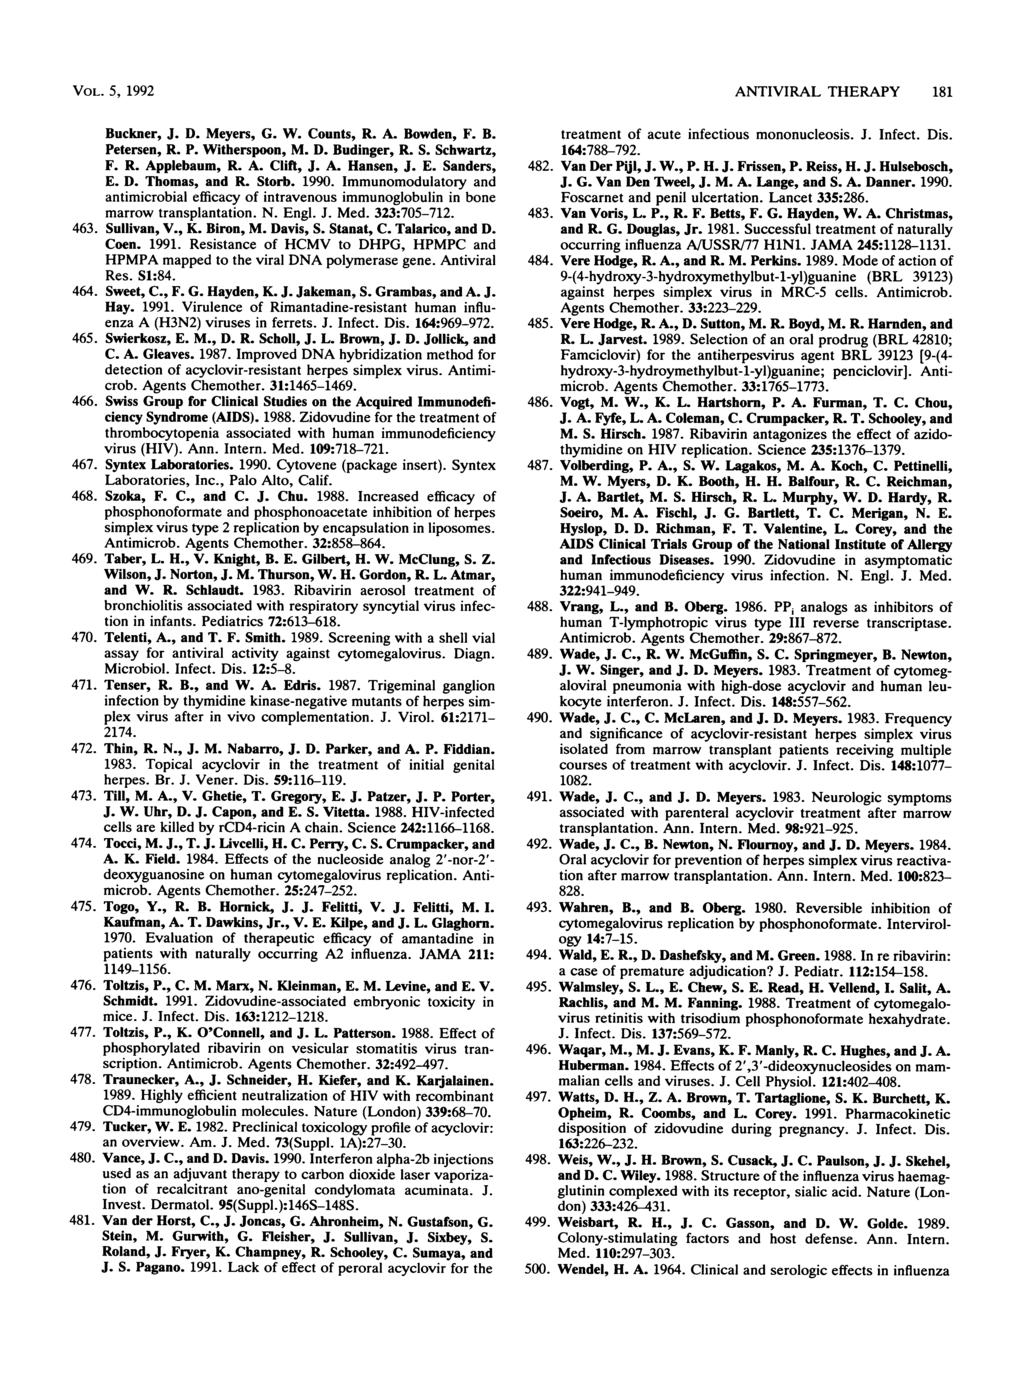 VOL. 5, 1992 Buckner, J. D. Meyers, G. W. Counts, R. A. Bowden, F. B. Petersen, R. P. Witherspoon, M. D. Budinger, R. S. Schwartz, F. R. Applebaum, R. A. Clift, J. A. Hansen, J. E. Sanders, E. D. Thomas, and R.